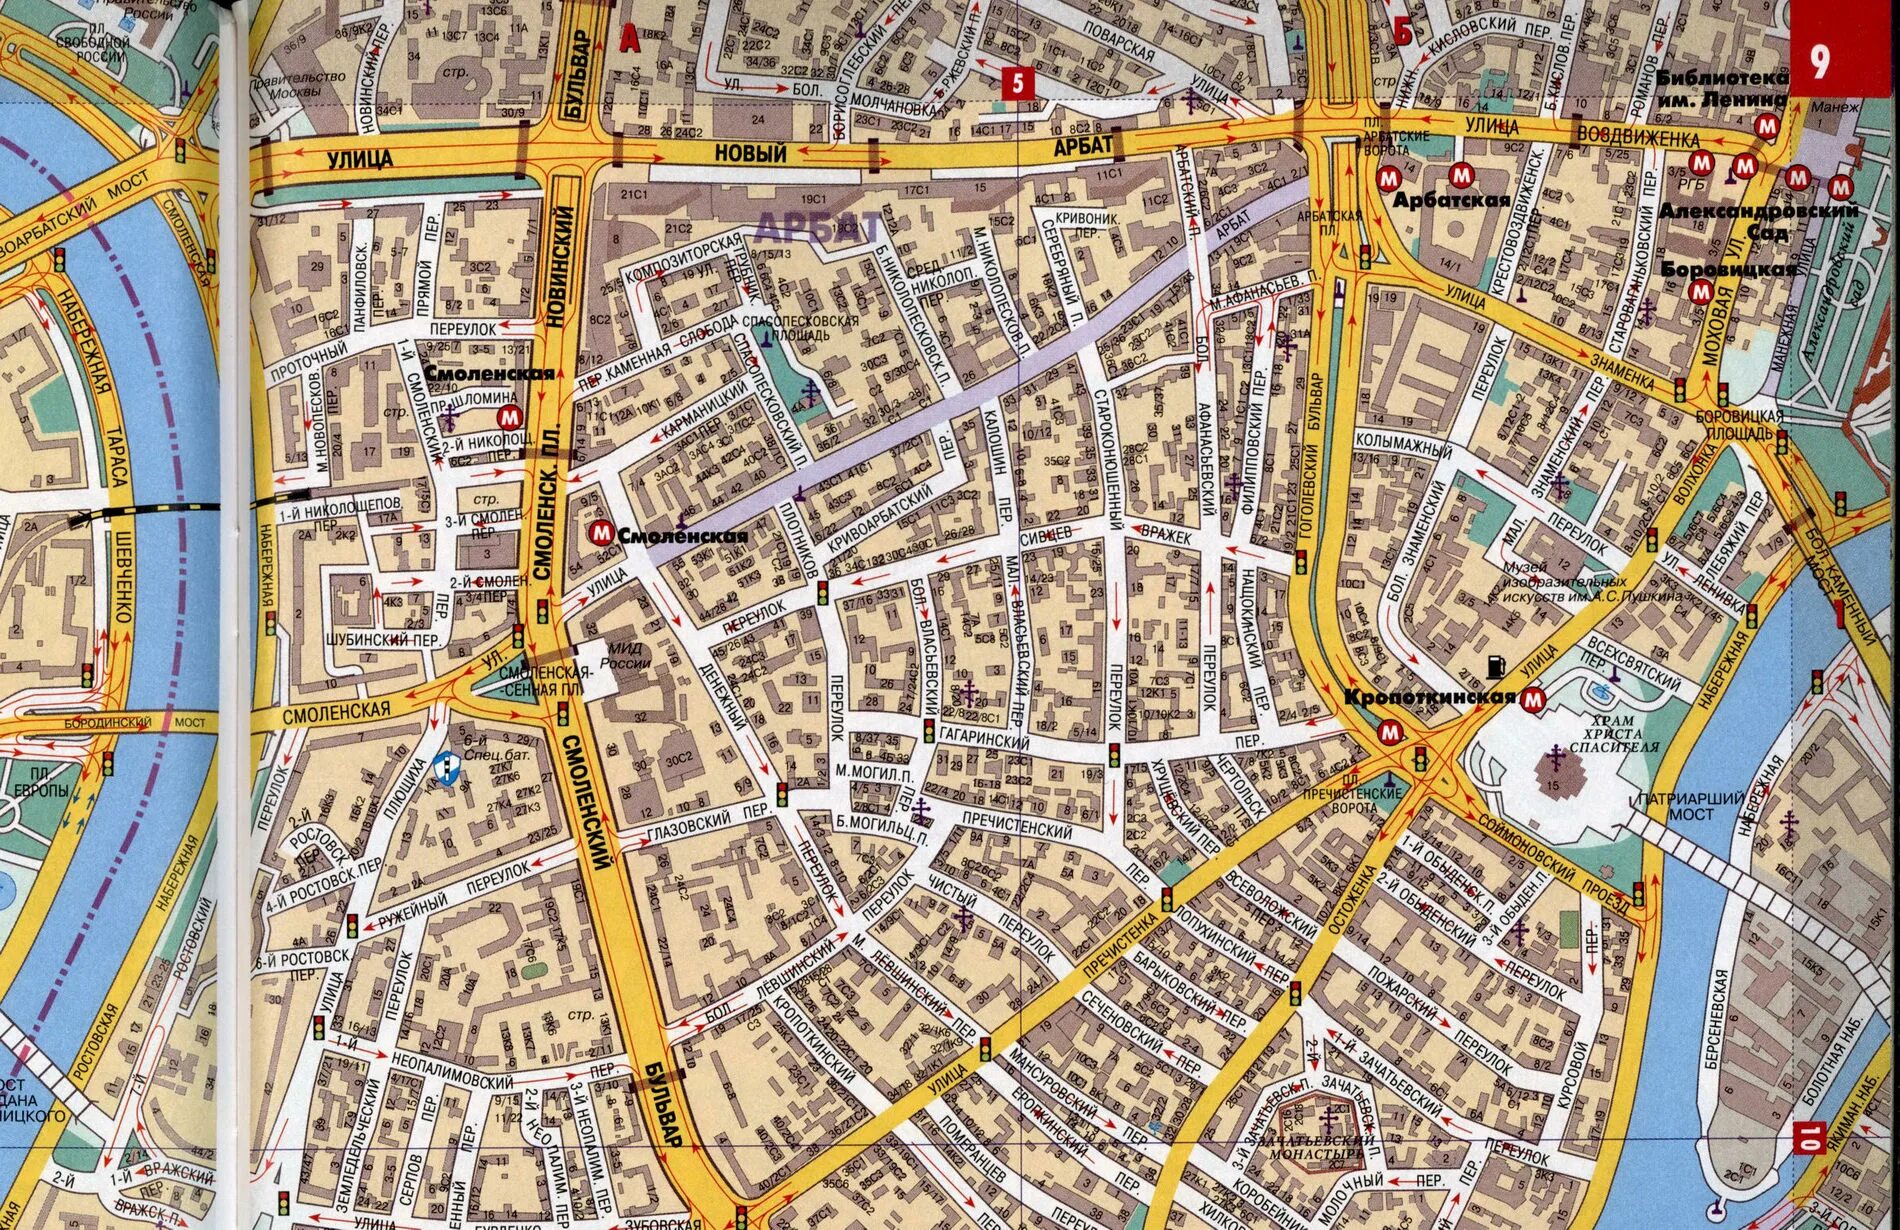 Местоположение улица дом. Старый Арбат на карте. Карта района Арбат. Старый Арбат на карте Москвы. Улица старый Арбат на карте.